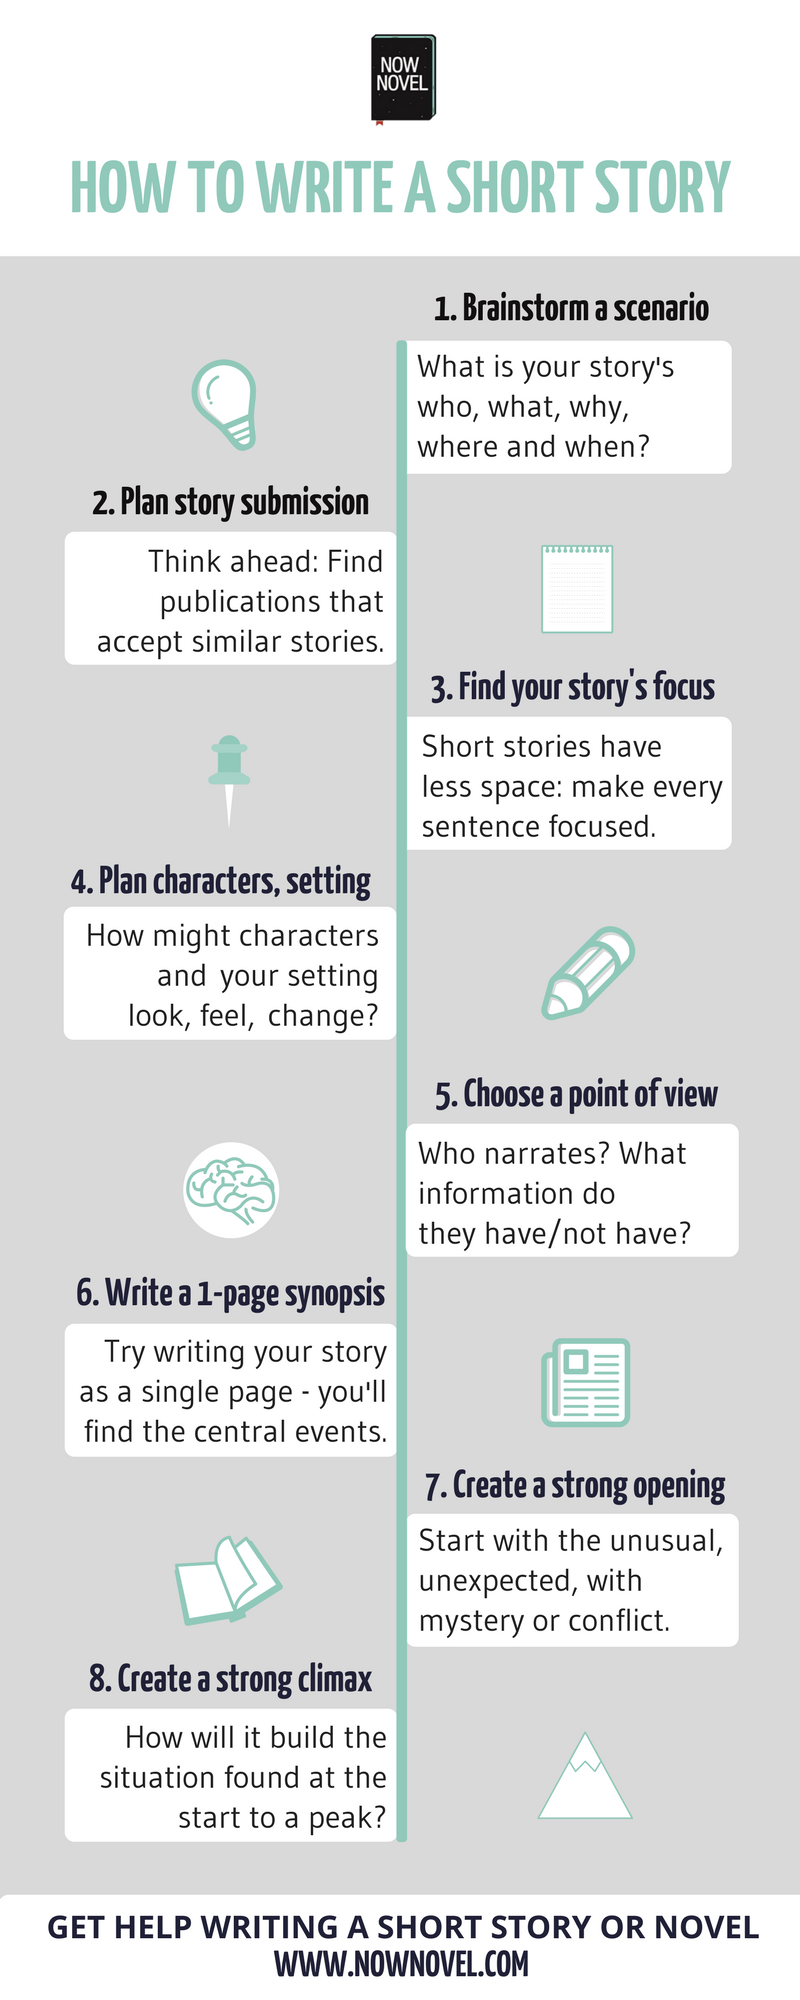 how-to-write-a-short-story-10-steps-now-novel